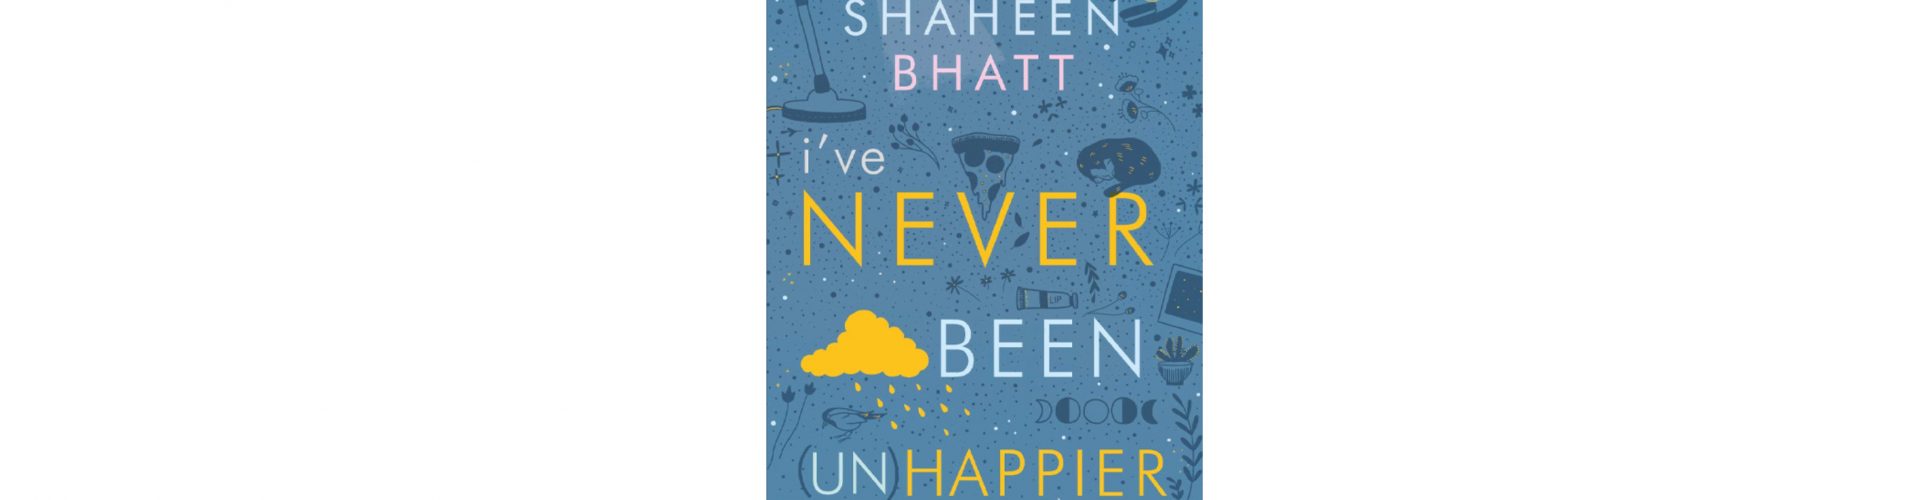 I’ve never been unhappier by Shaheen Bhatt